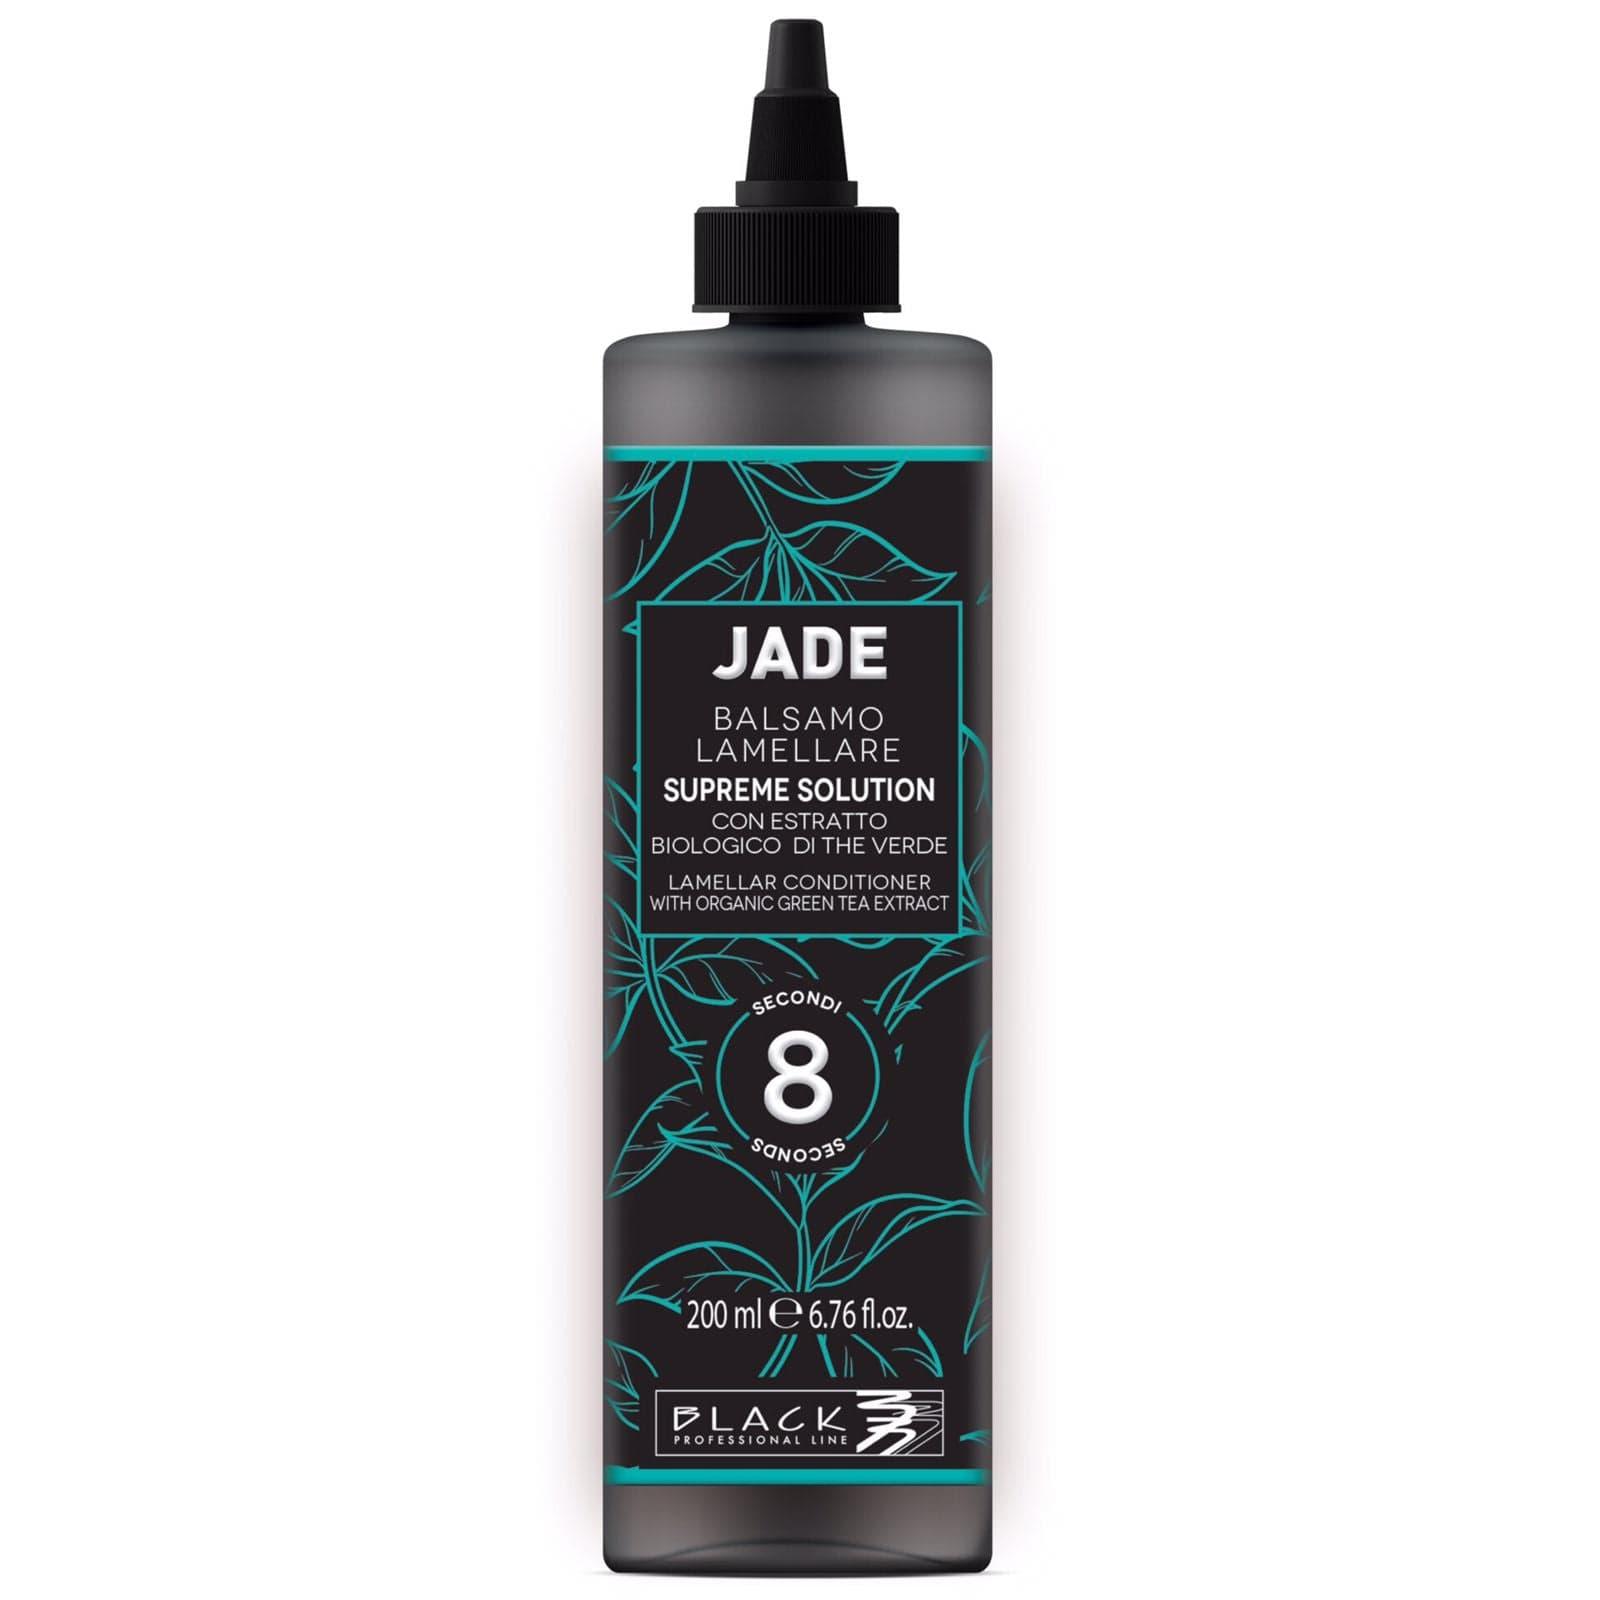 Black Jade Supreme Solution Lamellar Conditioner 200ml